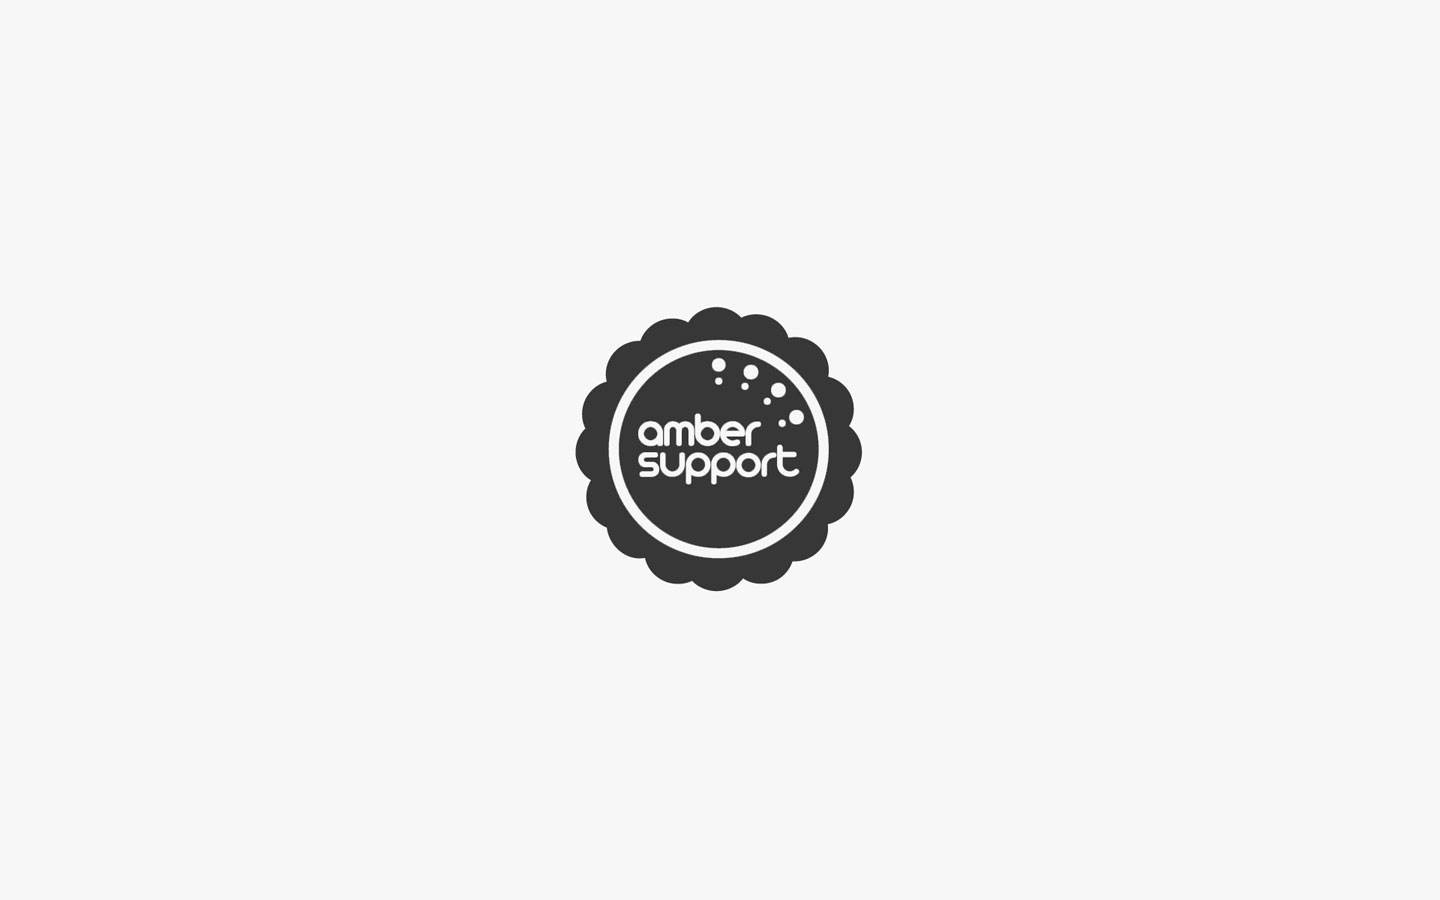 Amber Support Services Bromsgrove, Logo Design in Mono